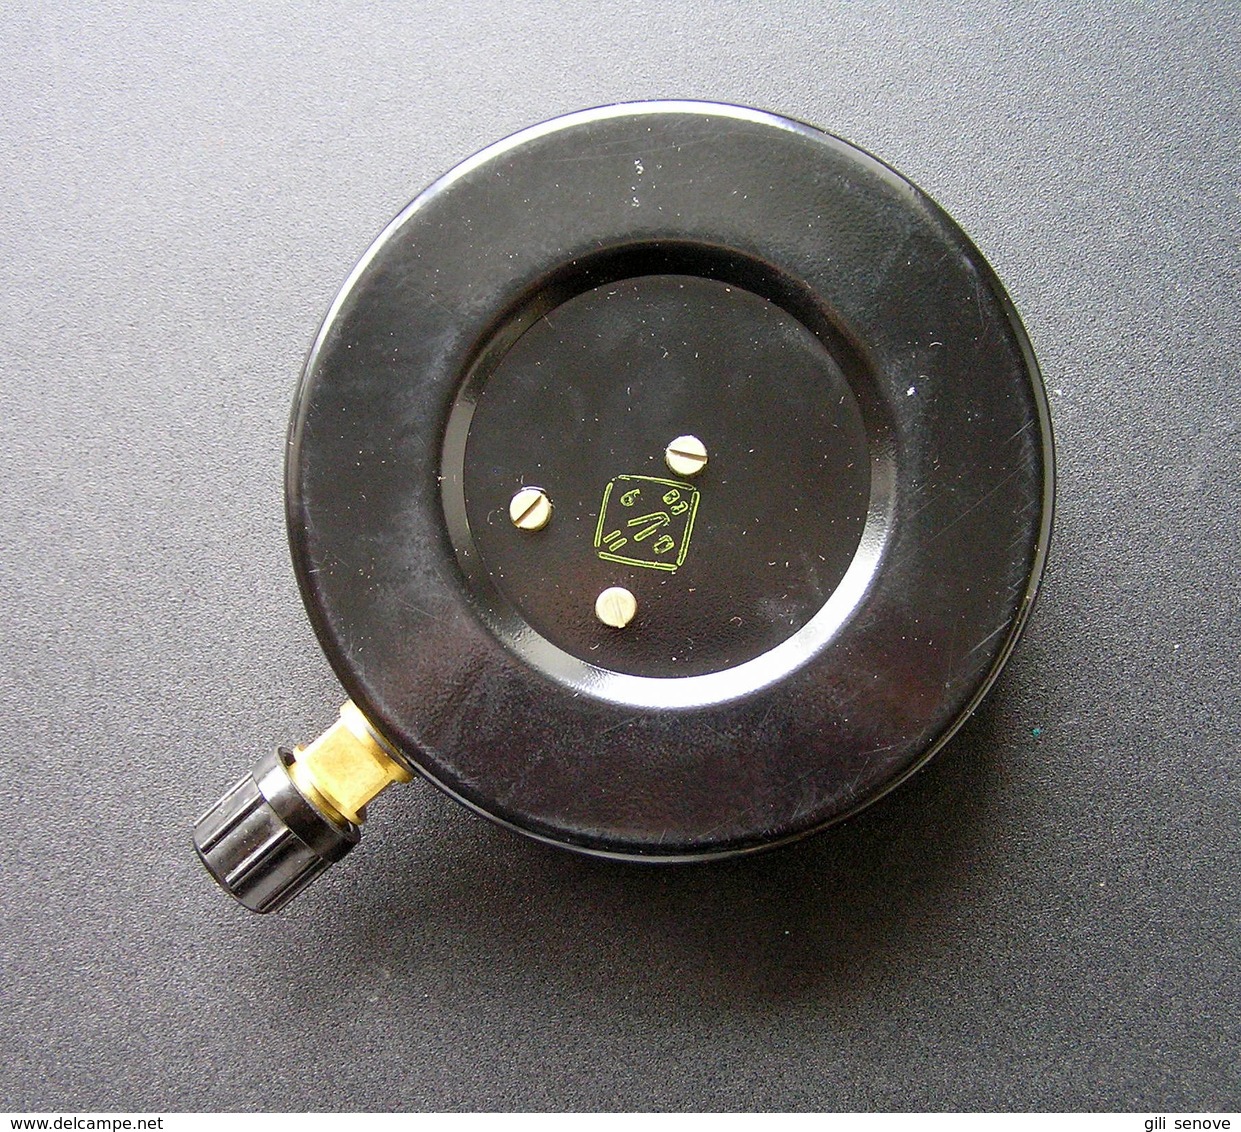 Vintage Soviet Industrial Manometer MTP-160, 0-10 kg/cm in Original Box